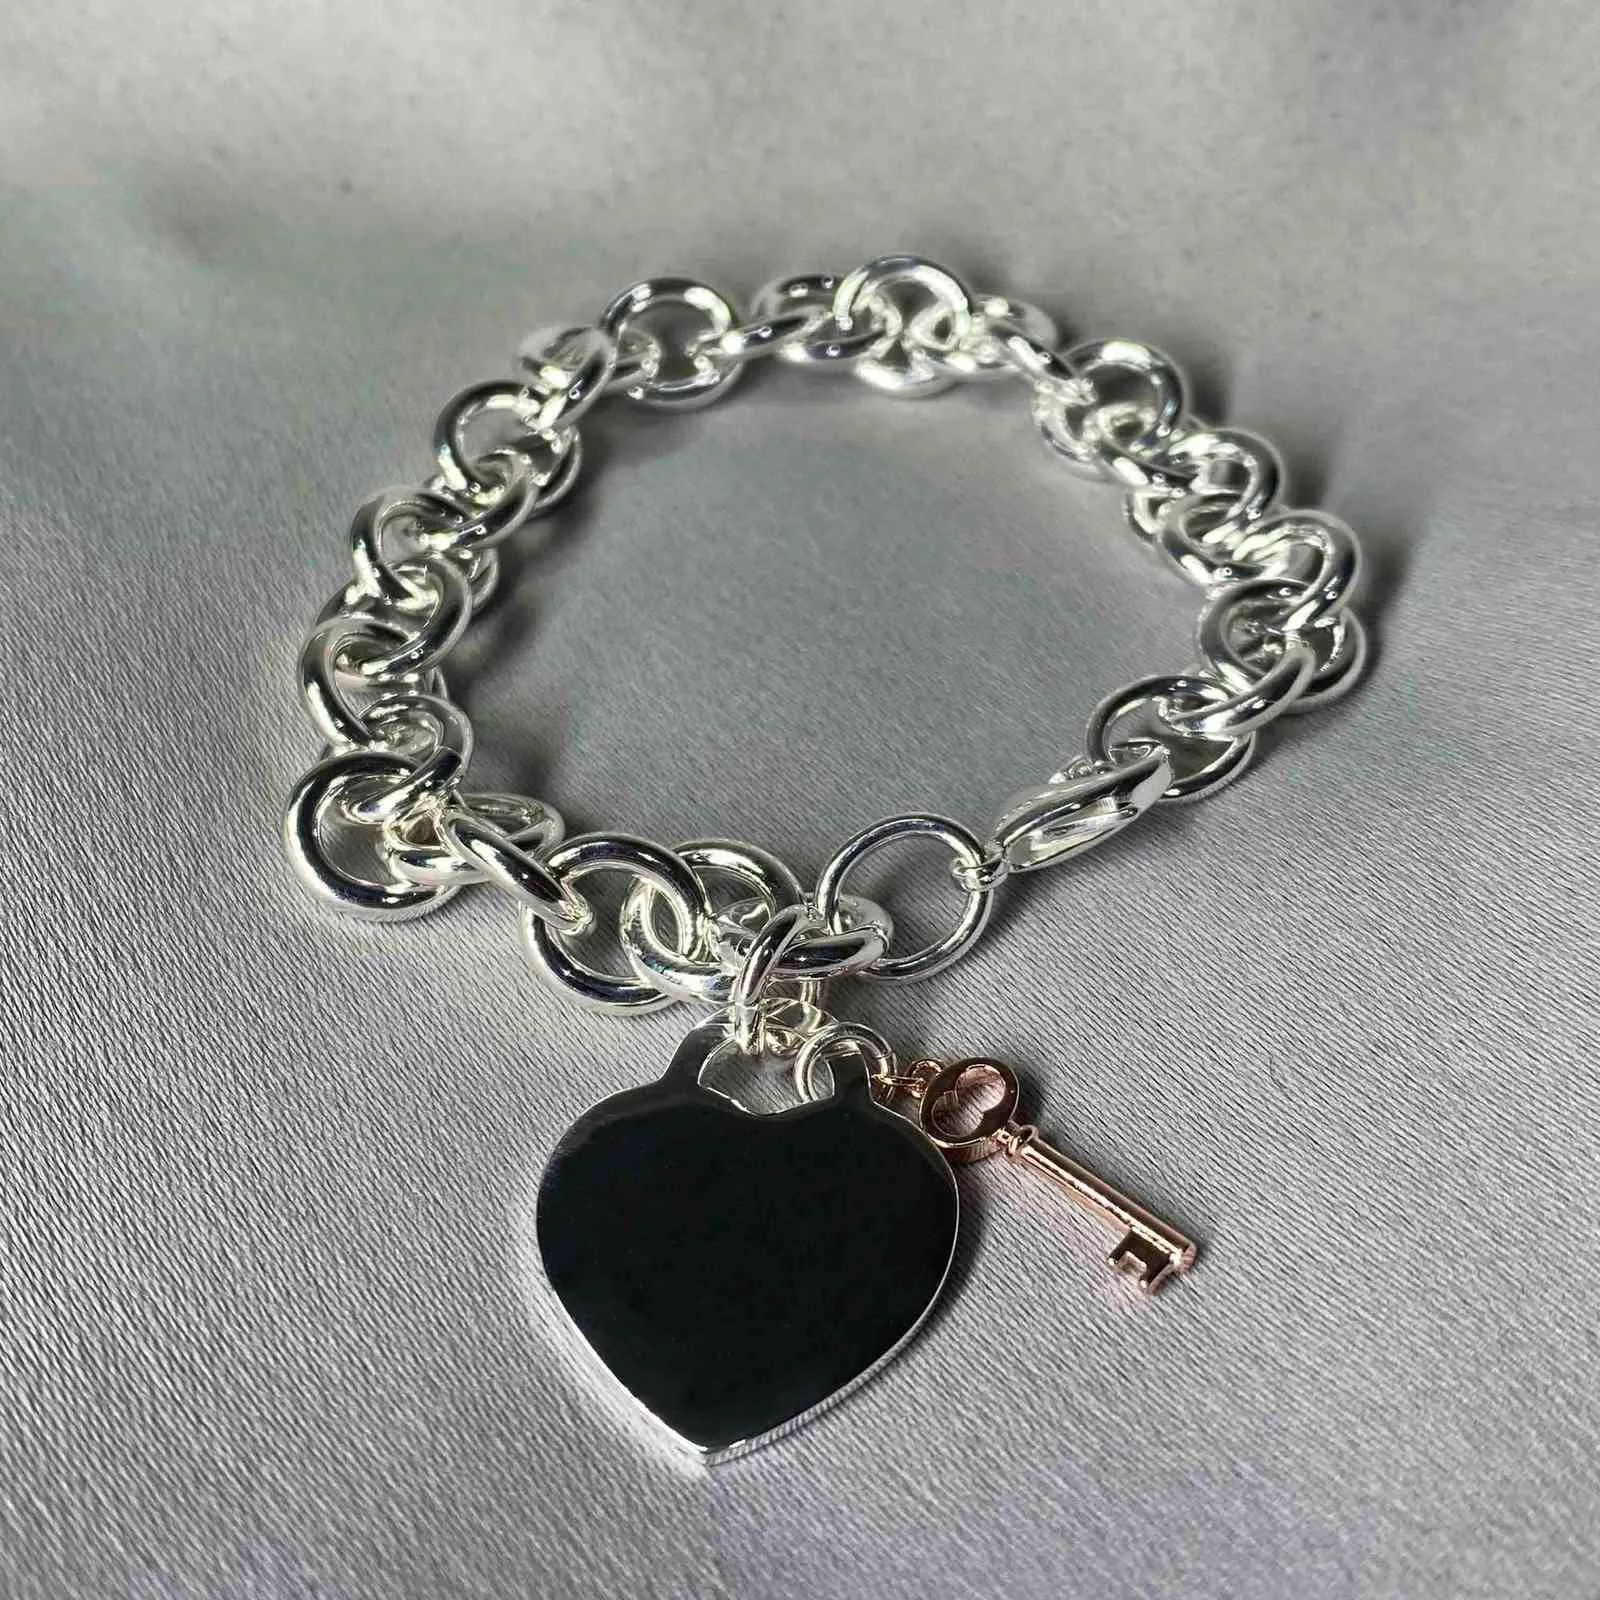 Jewelry: Ladybug bracelet Mabina girl 533261 Silver 925